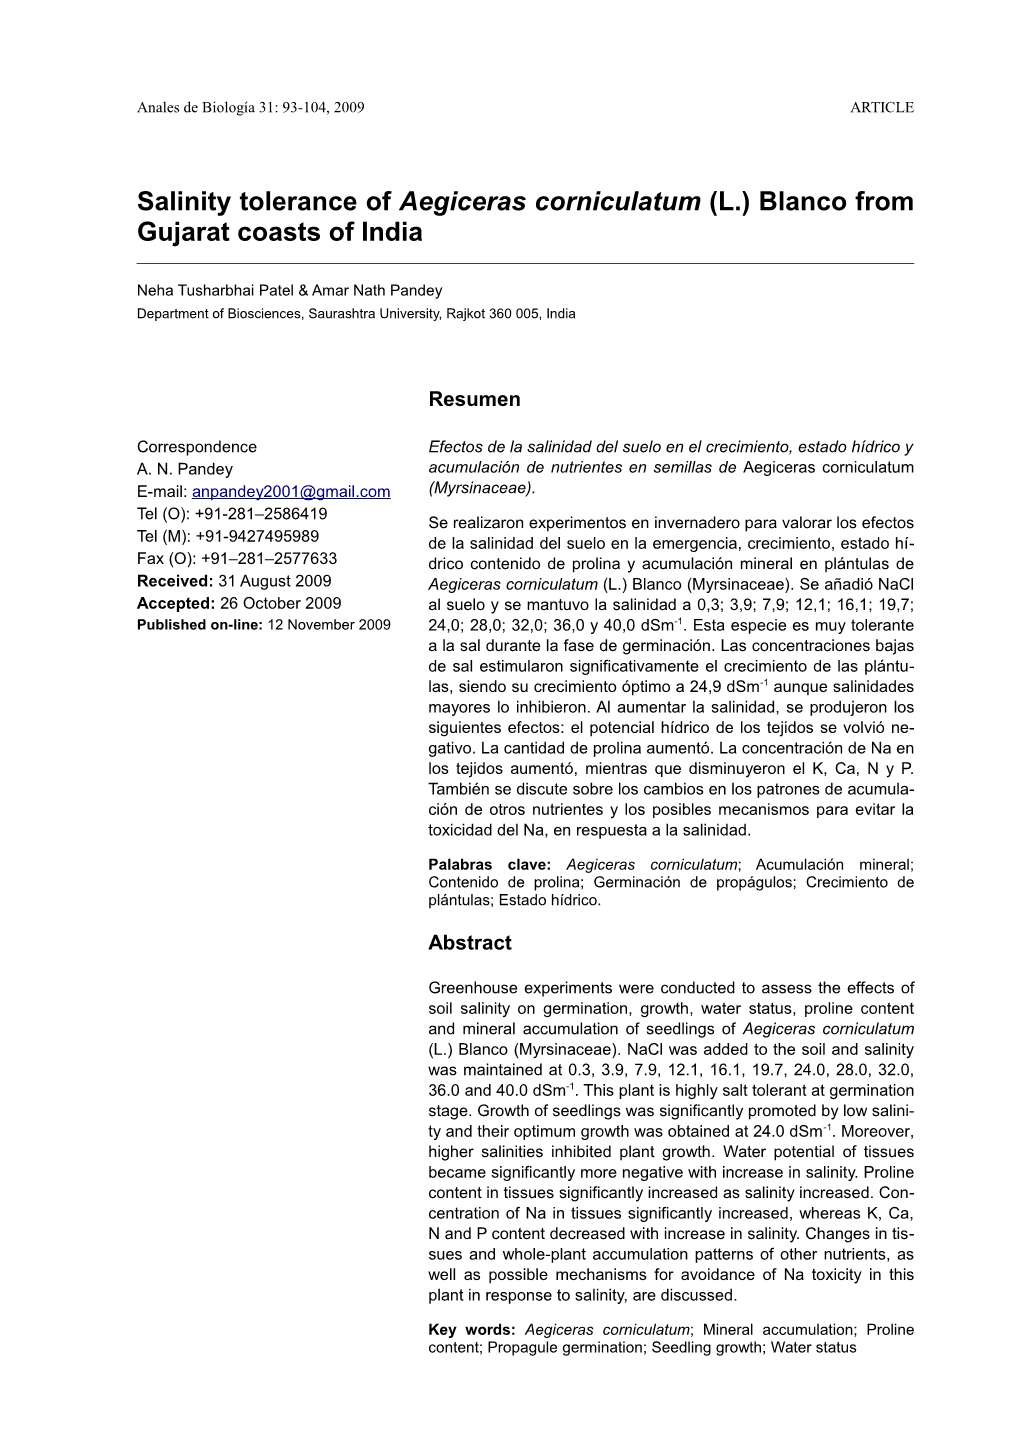 Salinity Tolerance of Aegiceras Corniculatum (L.) Blanco from Gujarat Coasts of India